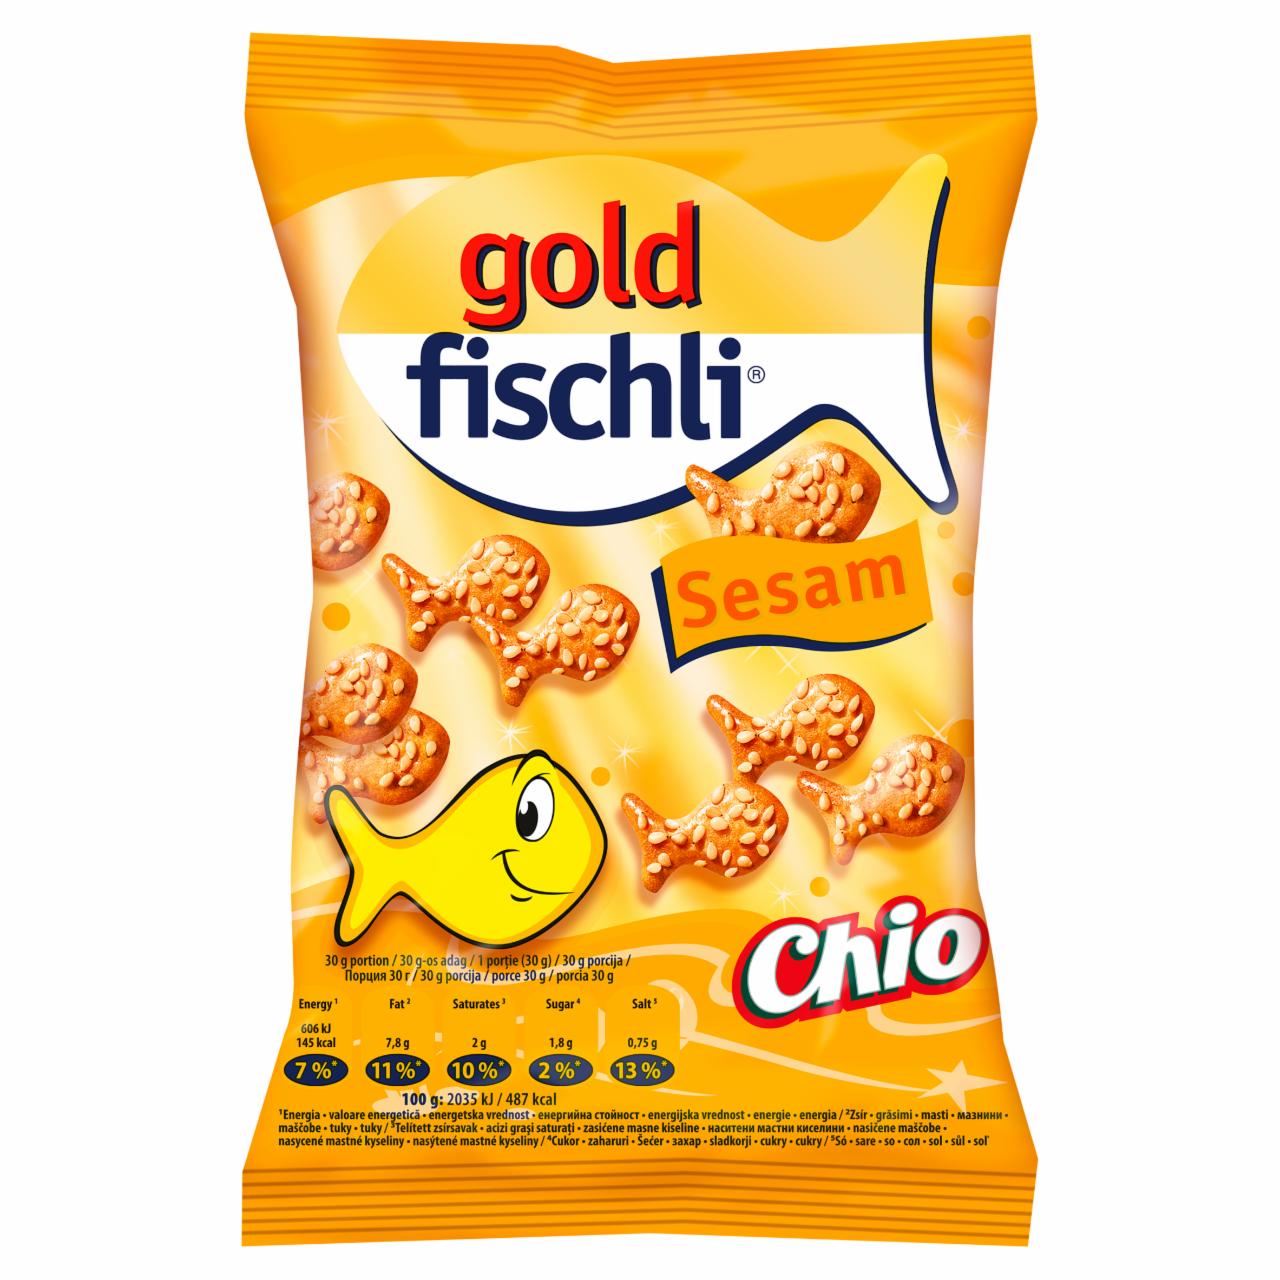 Photo - Chio Gold Fischli Cracker with Sesame